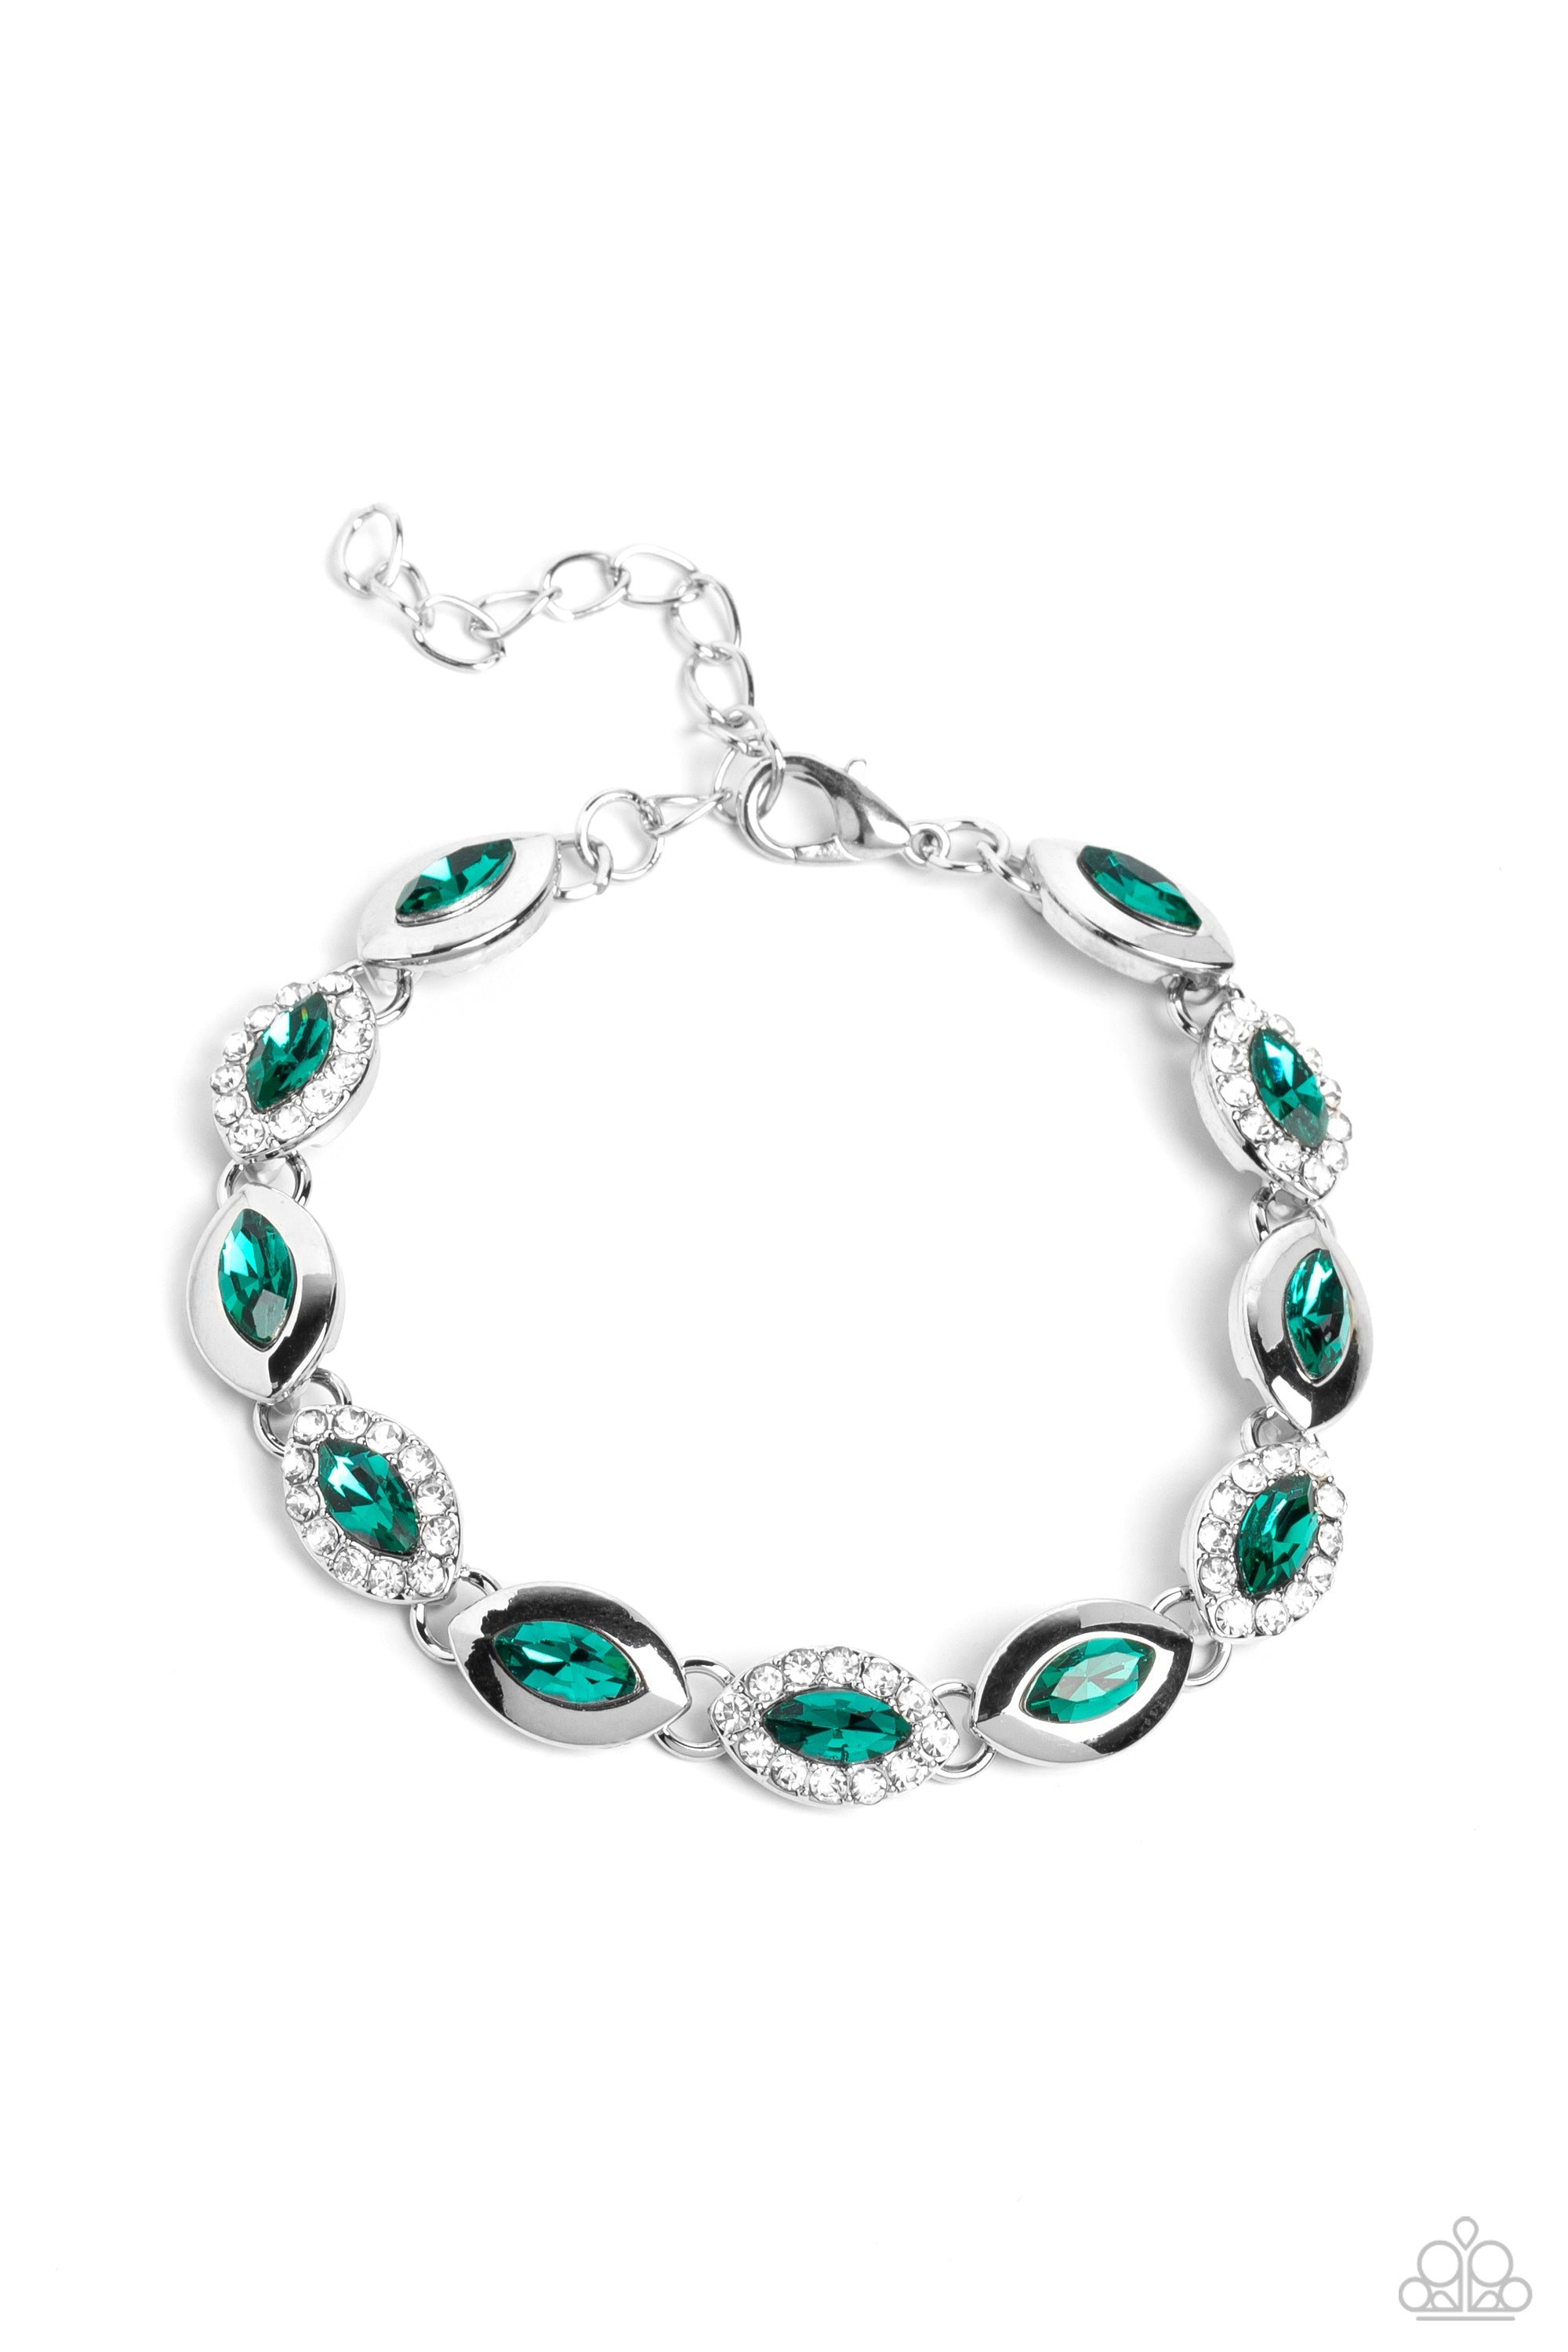 Some Serious Sparkle Green Rhinestone Bracelet - Paparazzi Accessories- lightbox - CarasShop.com - $5 Jewelry by Cara Jewels